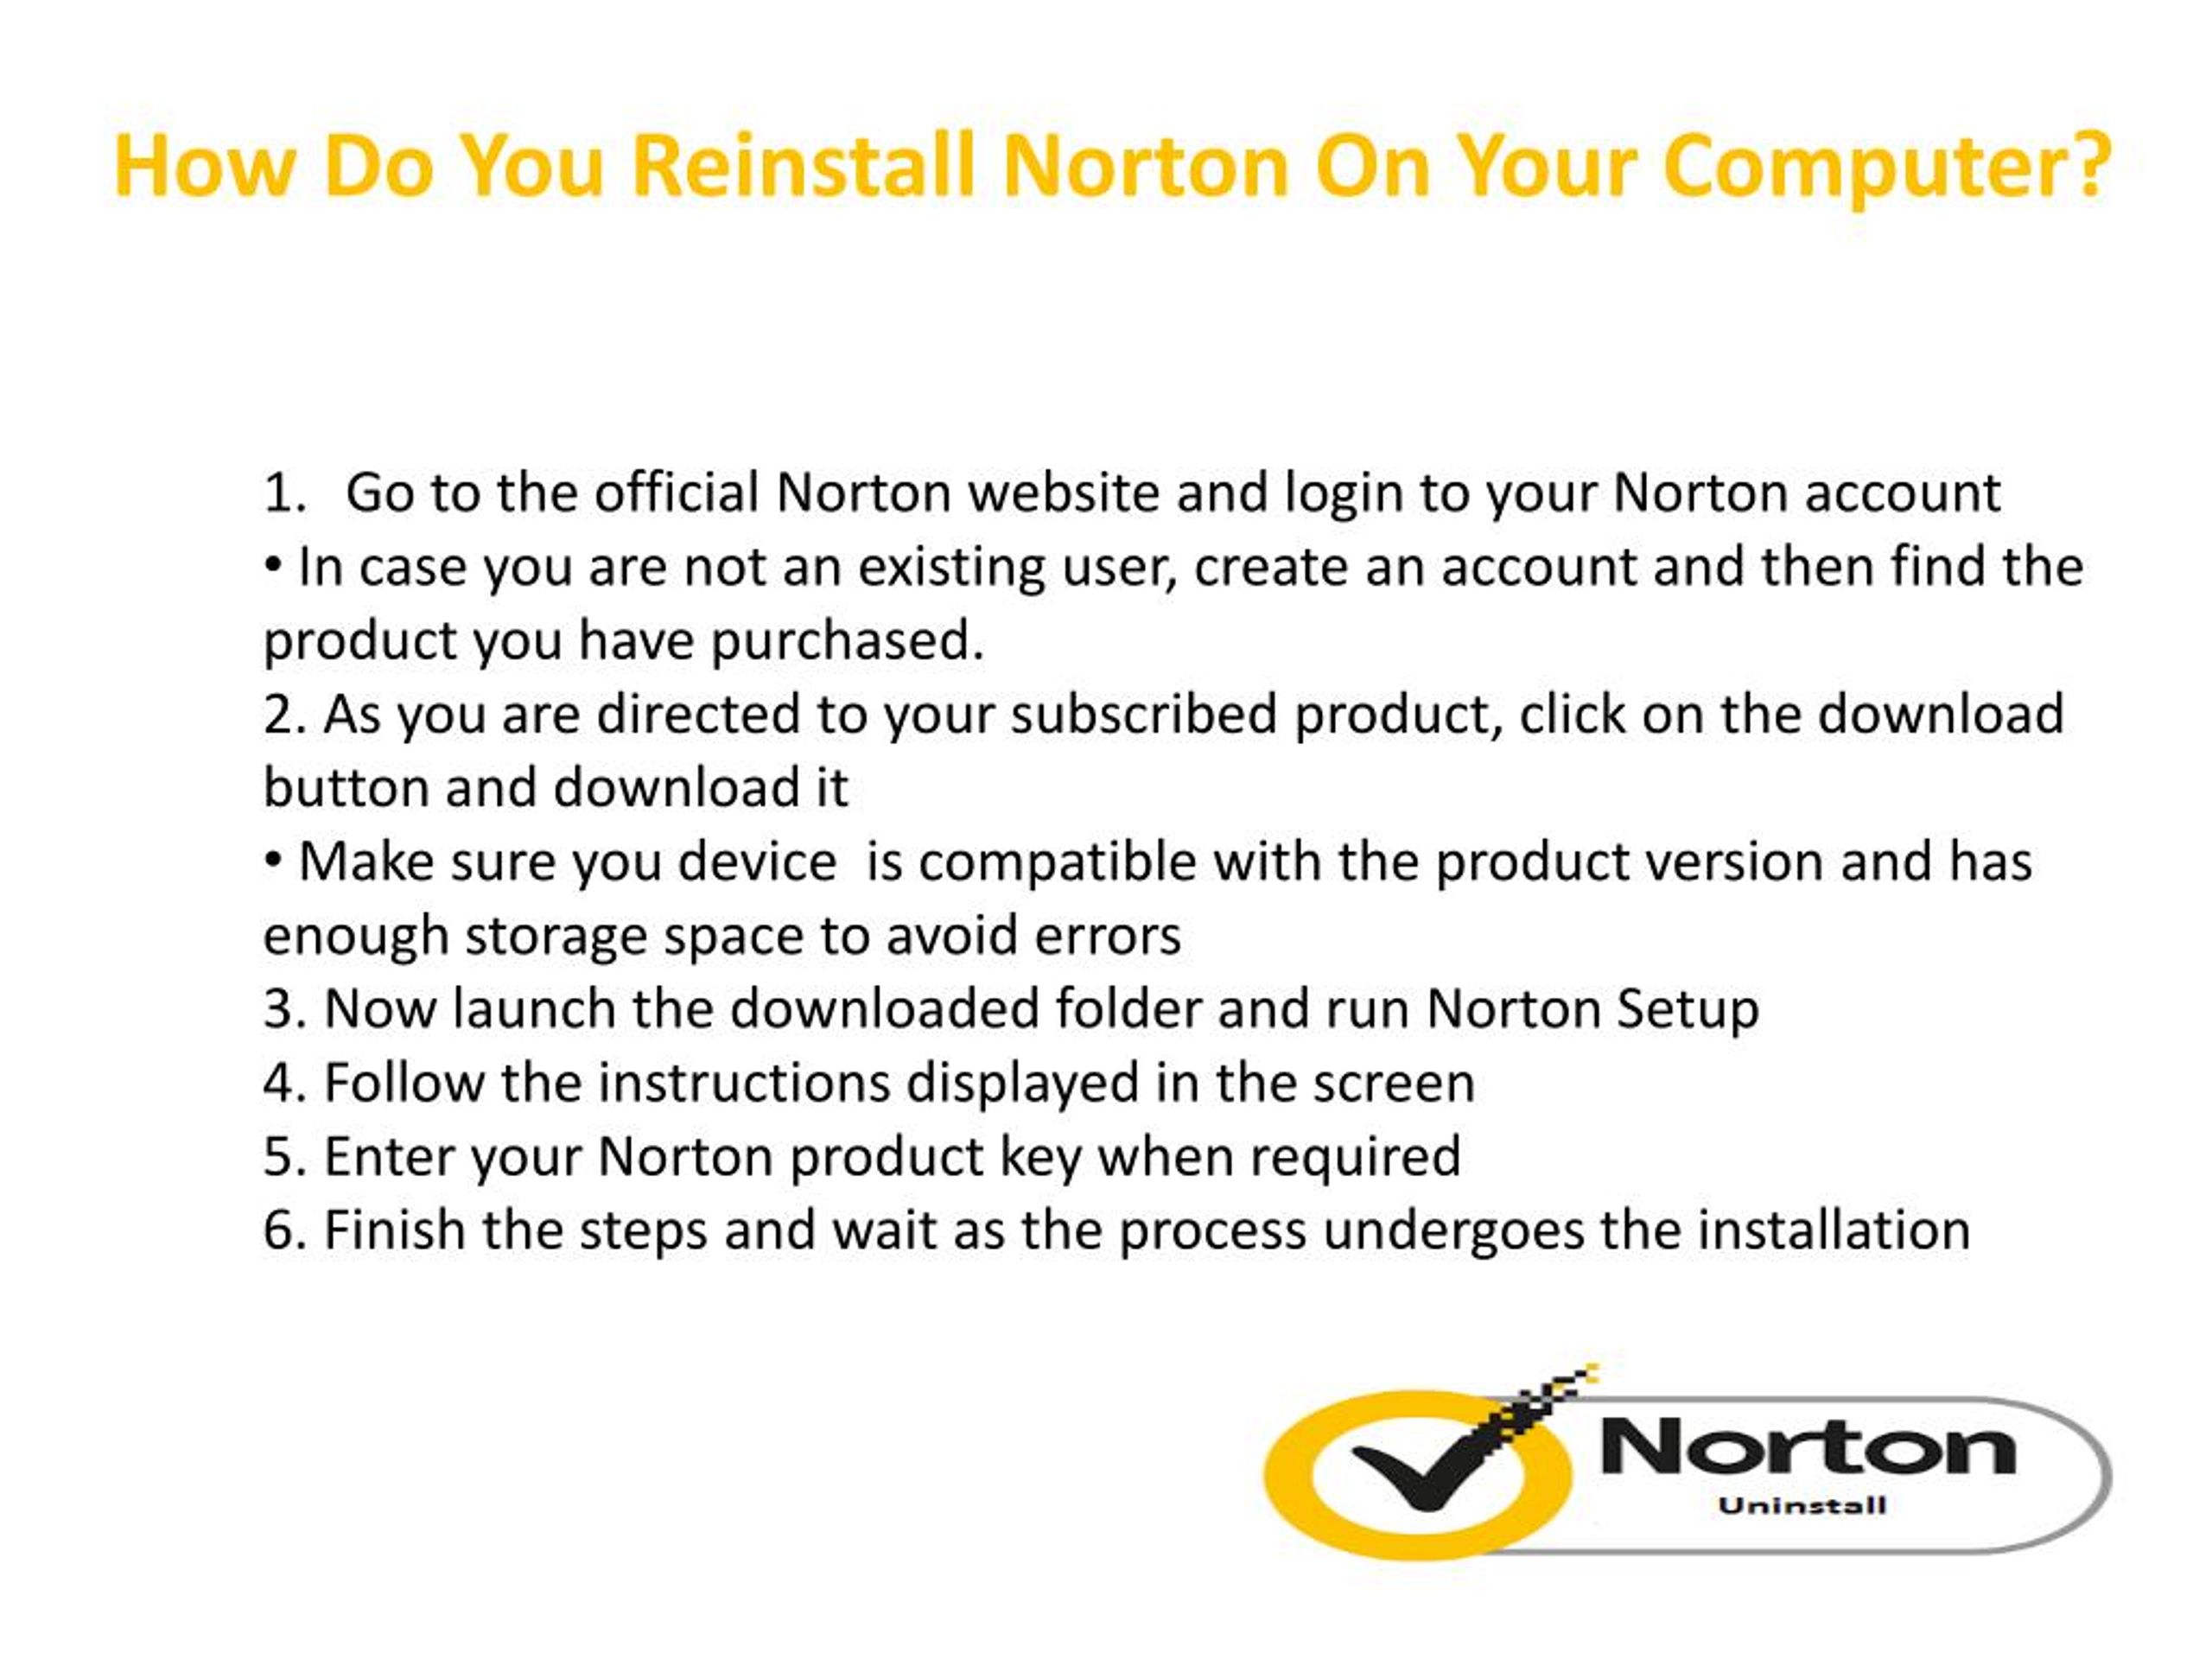 reinstall norton on new computer